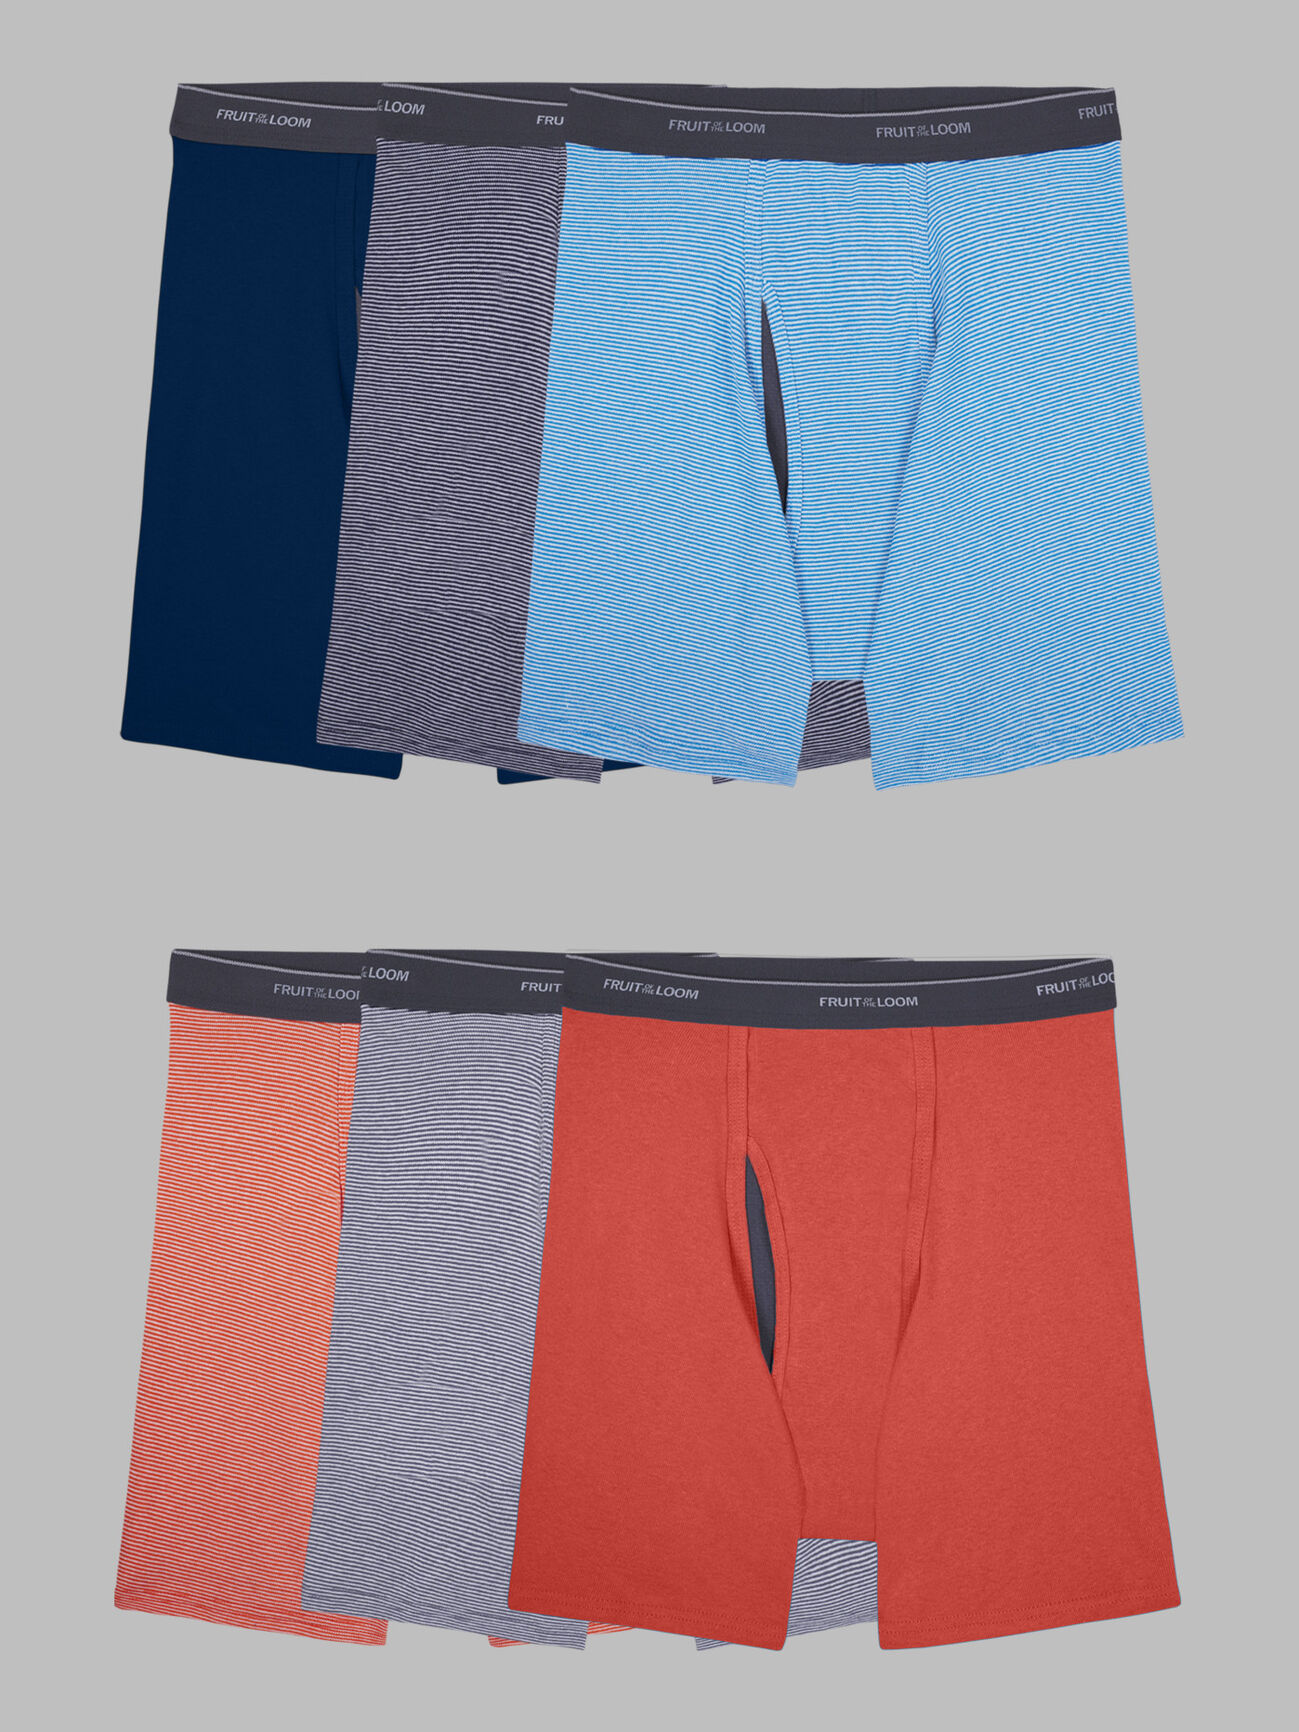 Shop Men's Cotton Underwear Boxer Shorts in Fun and Unusual Prints!